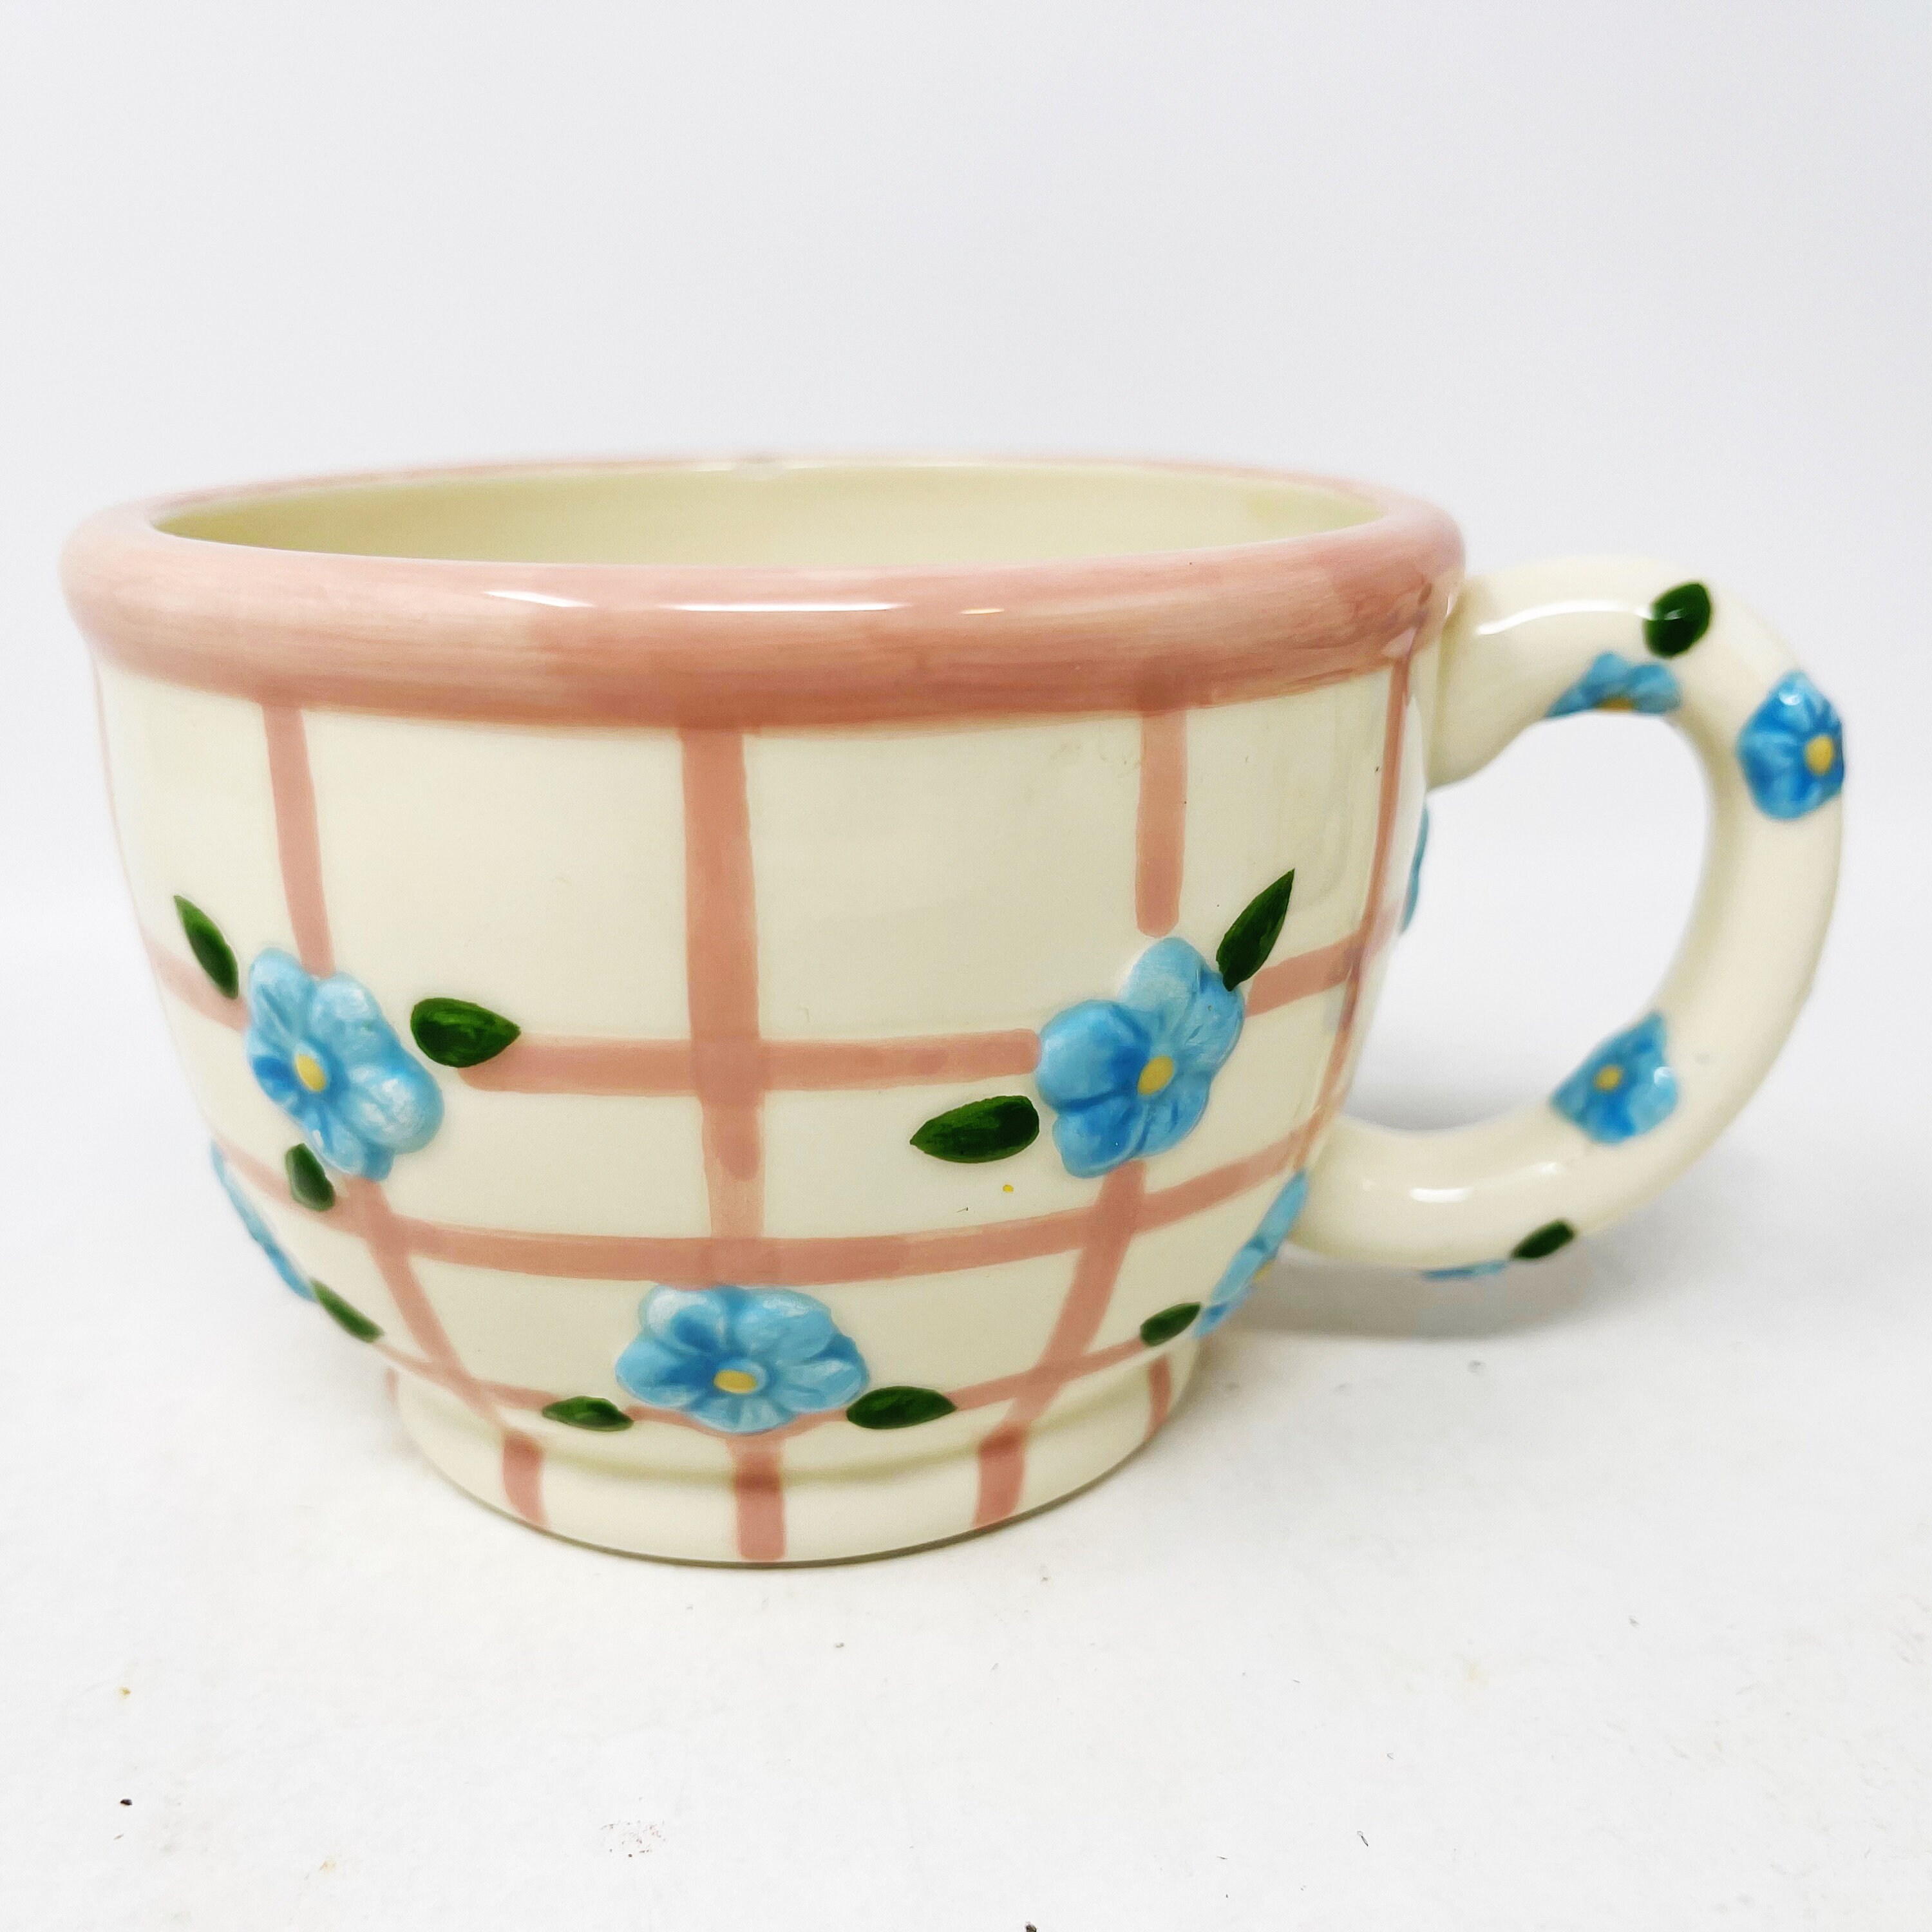 Mary Engelbreit Mug Cream Sugar Teacup Rose Patch | Etsy